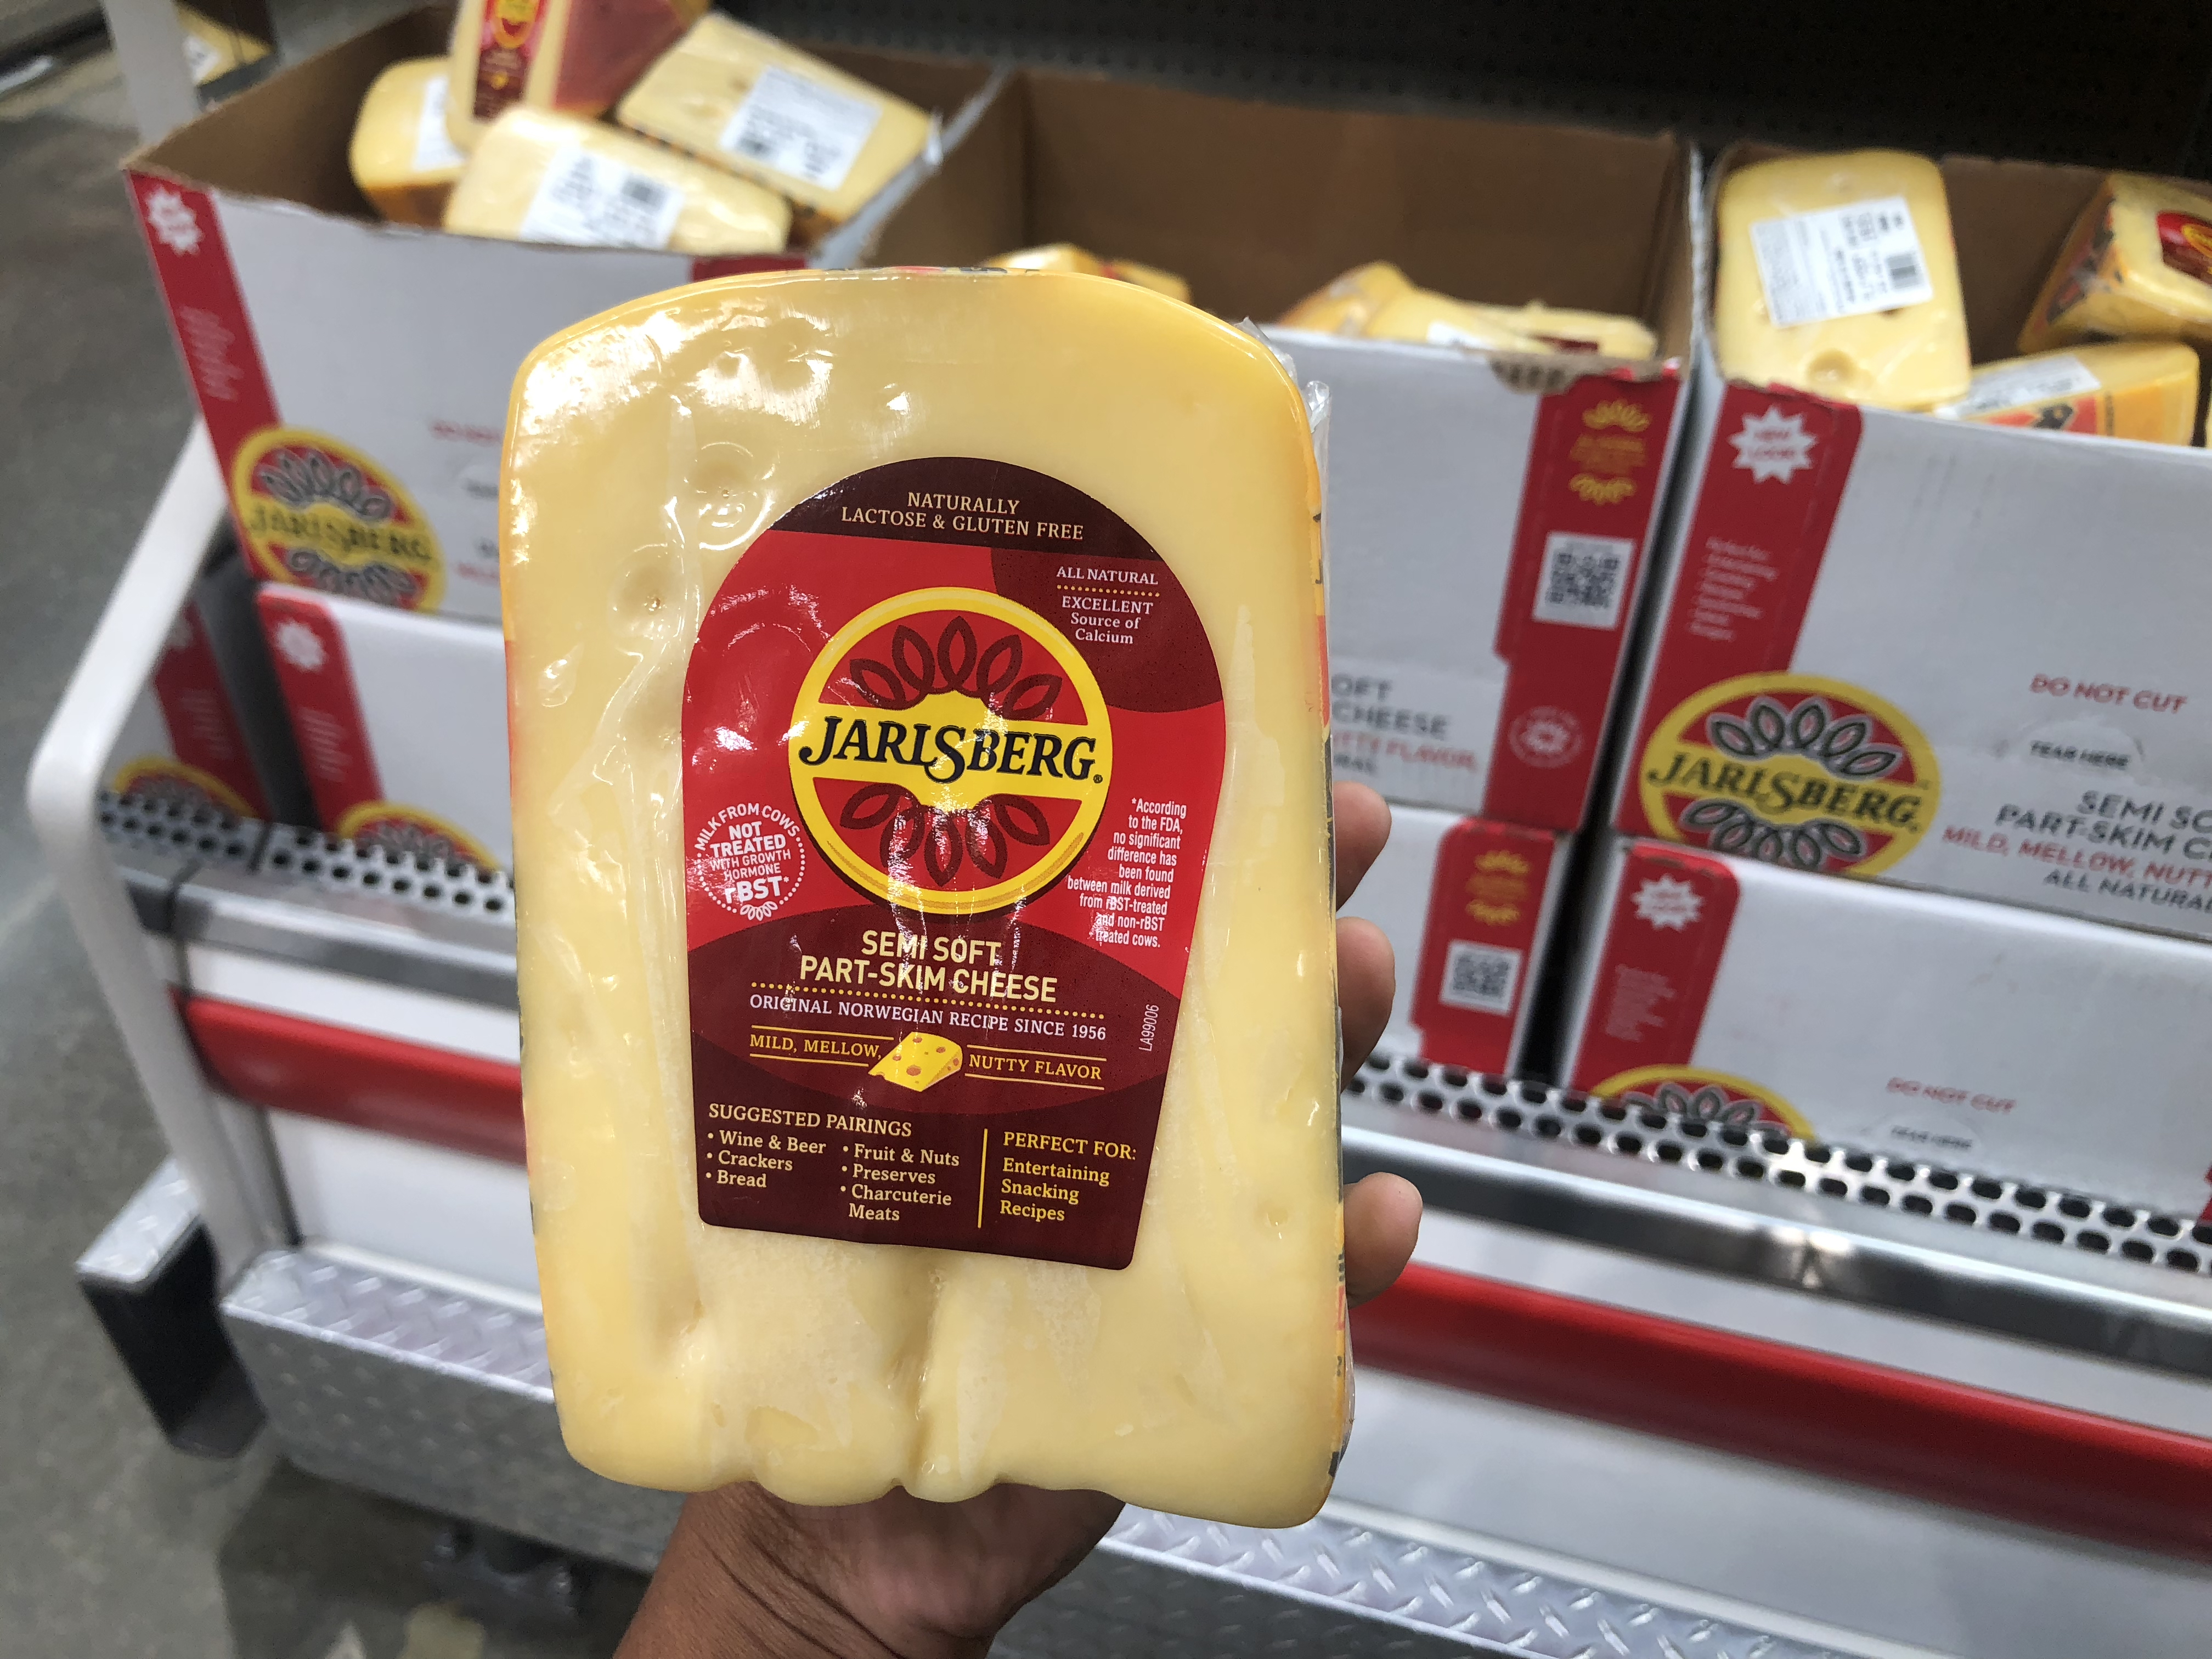 Costco deals October 2018 – Jarlsberg cheese at Costco